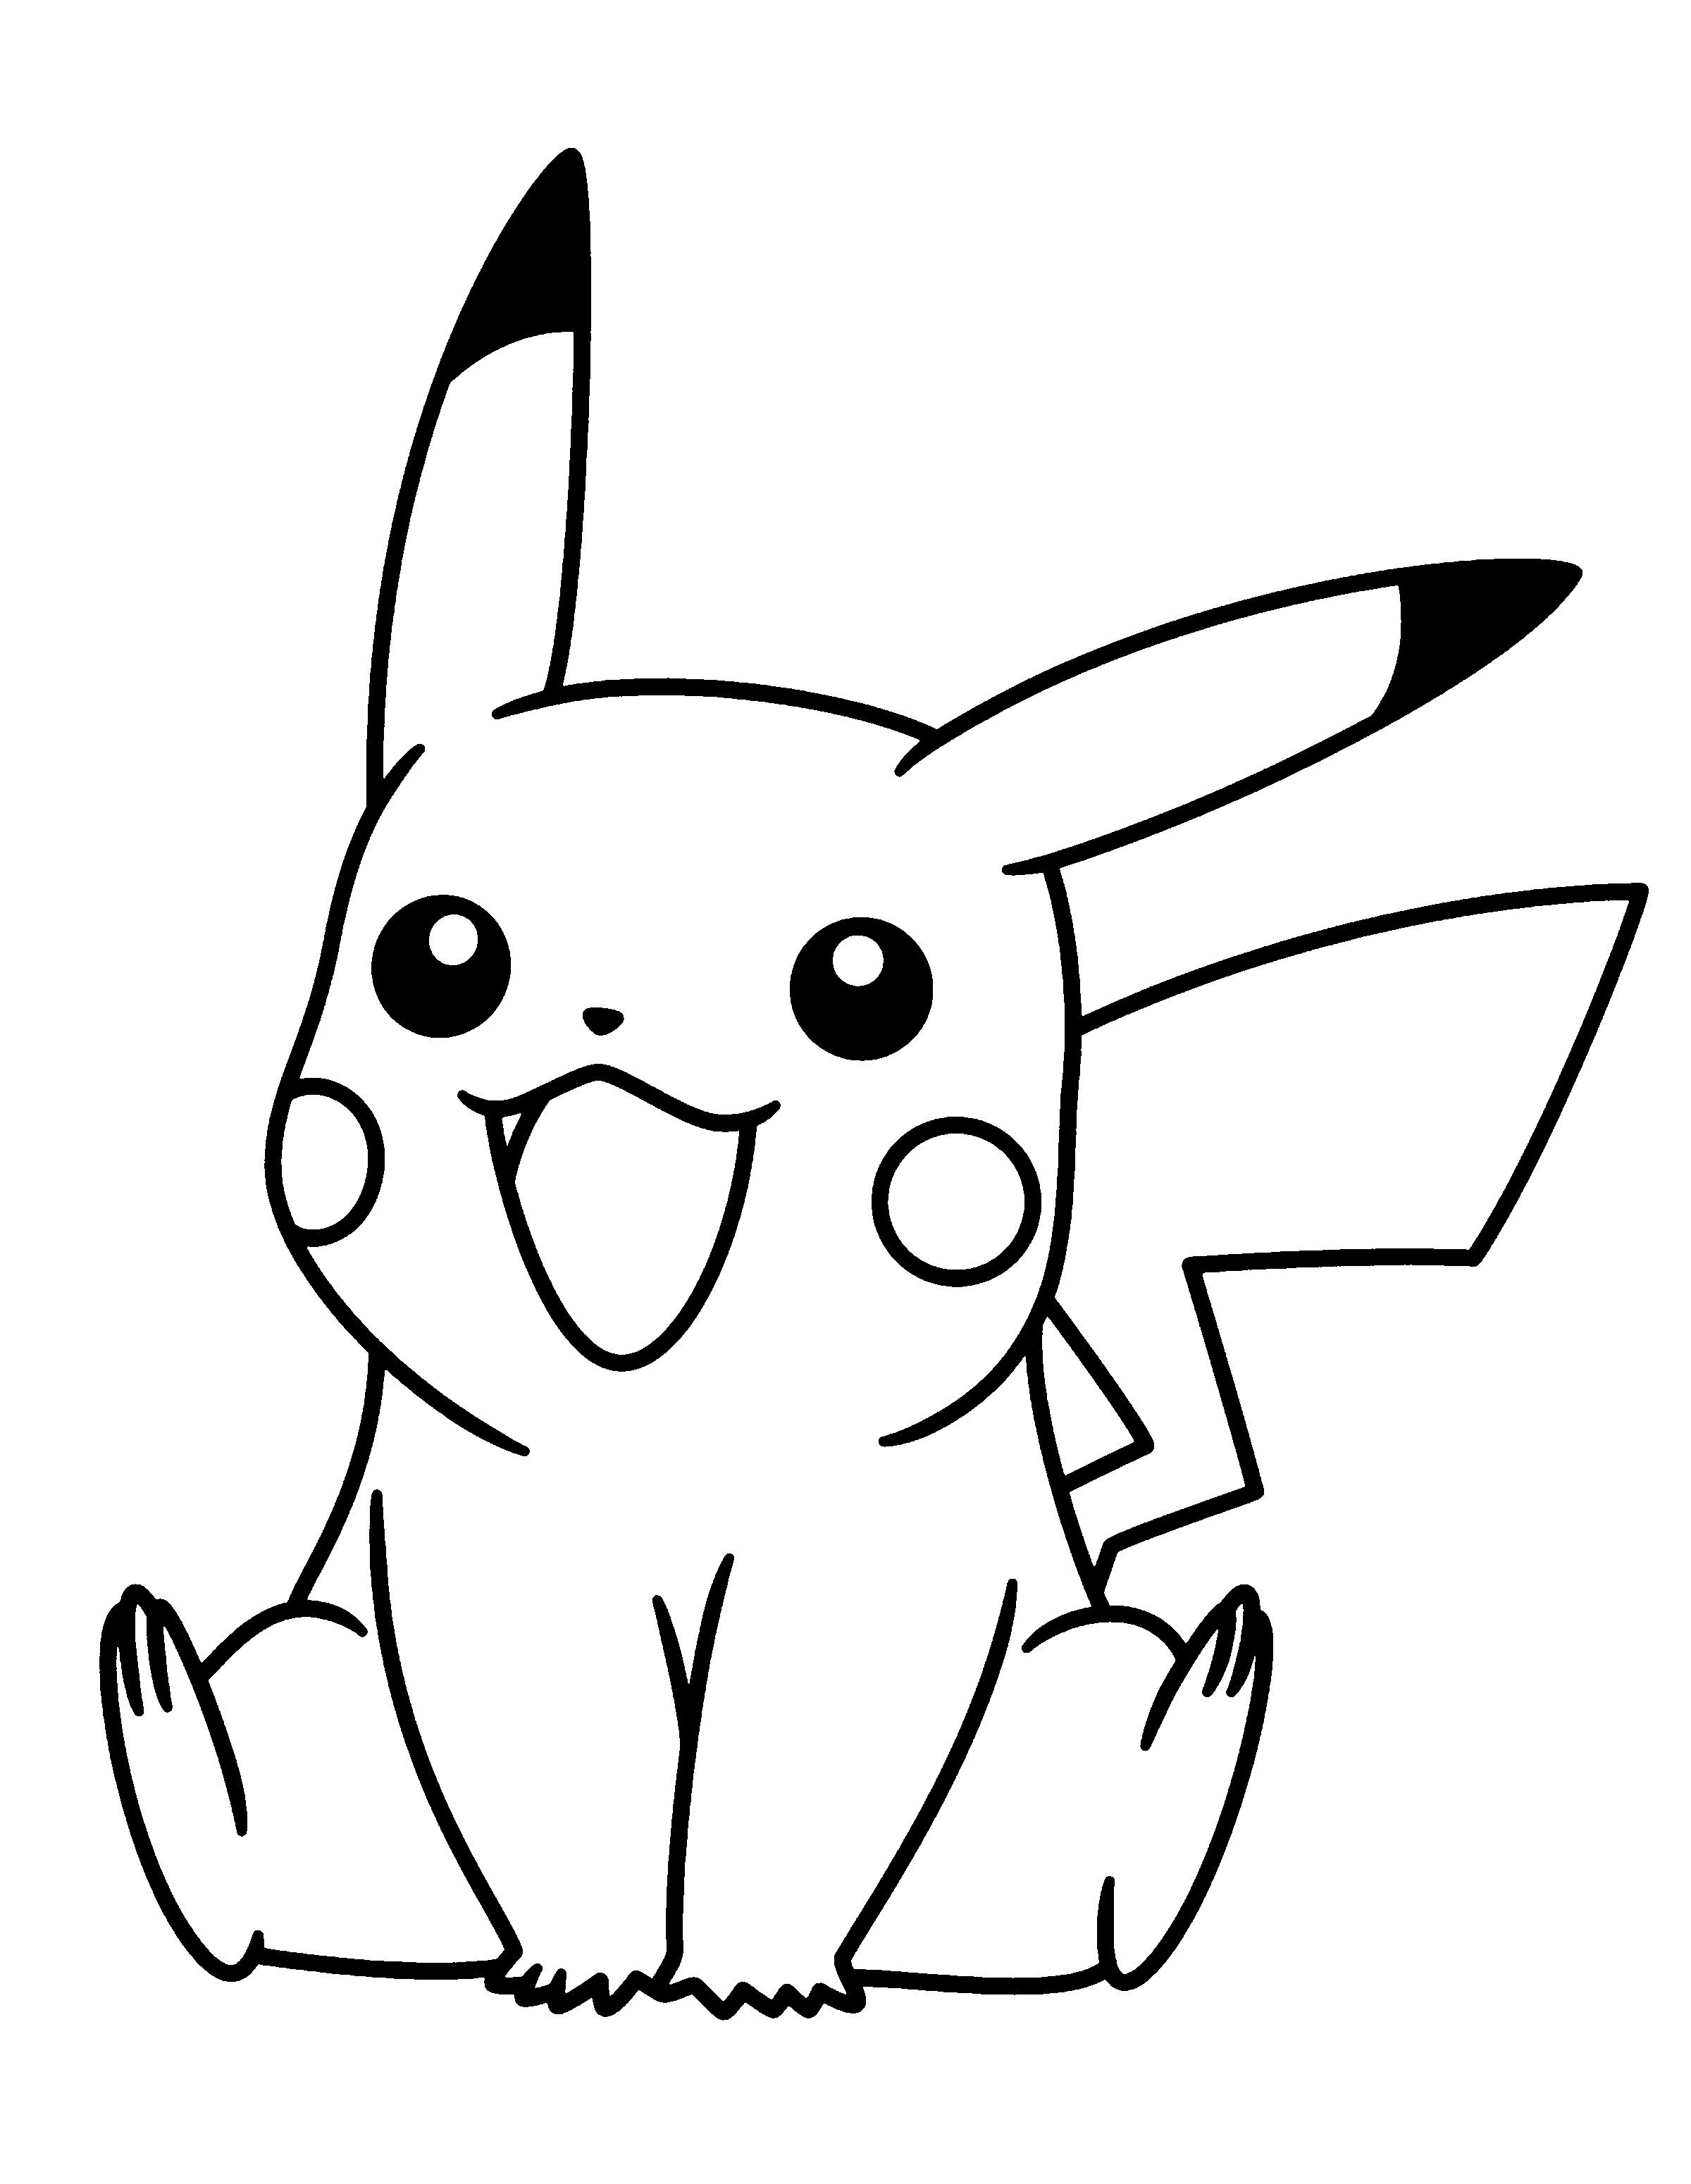 Cách vẽ Pikachu siêu dễ thương  Vẽ pikachu đơn giản  Vẽ pokemon  YouTube